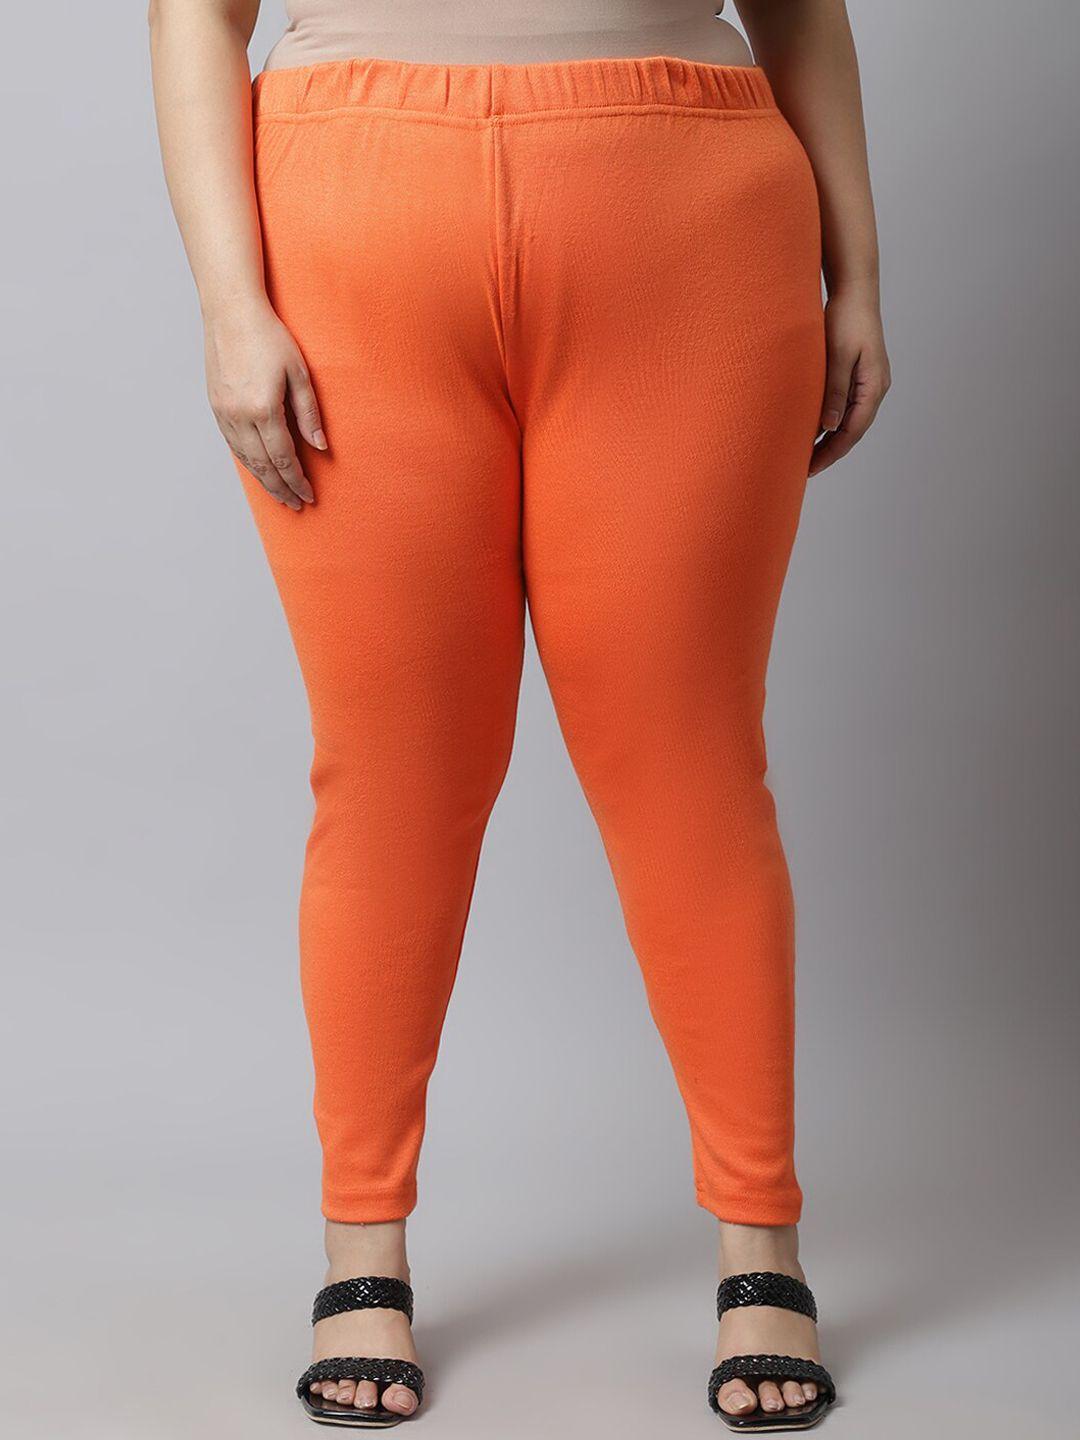 tag 7 plus women plus size orange solid ankle-length leggings